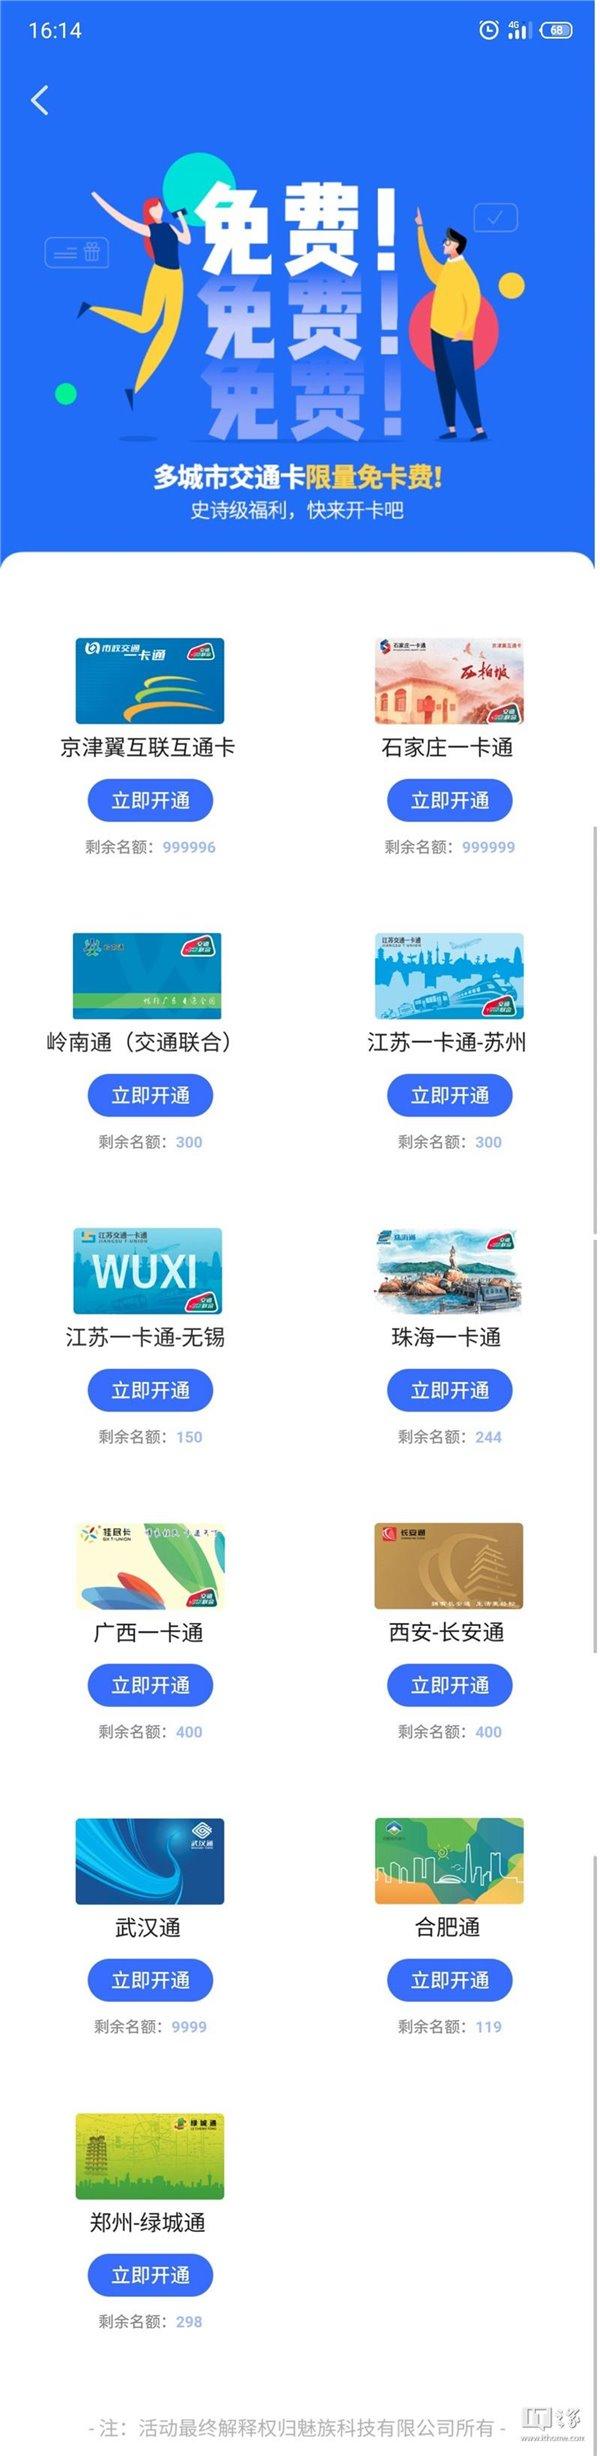 Meizu Pay开启免费开卡活动